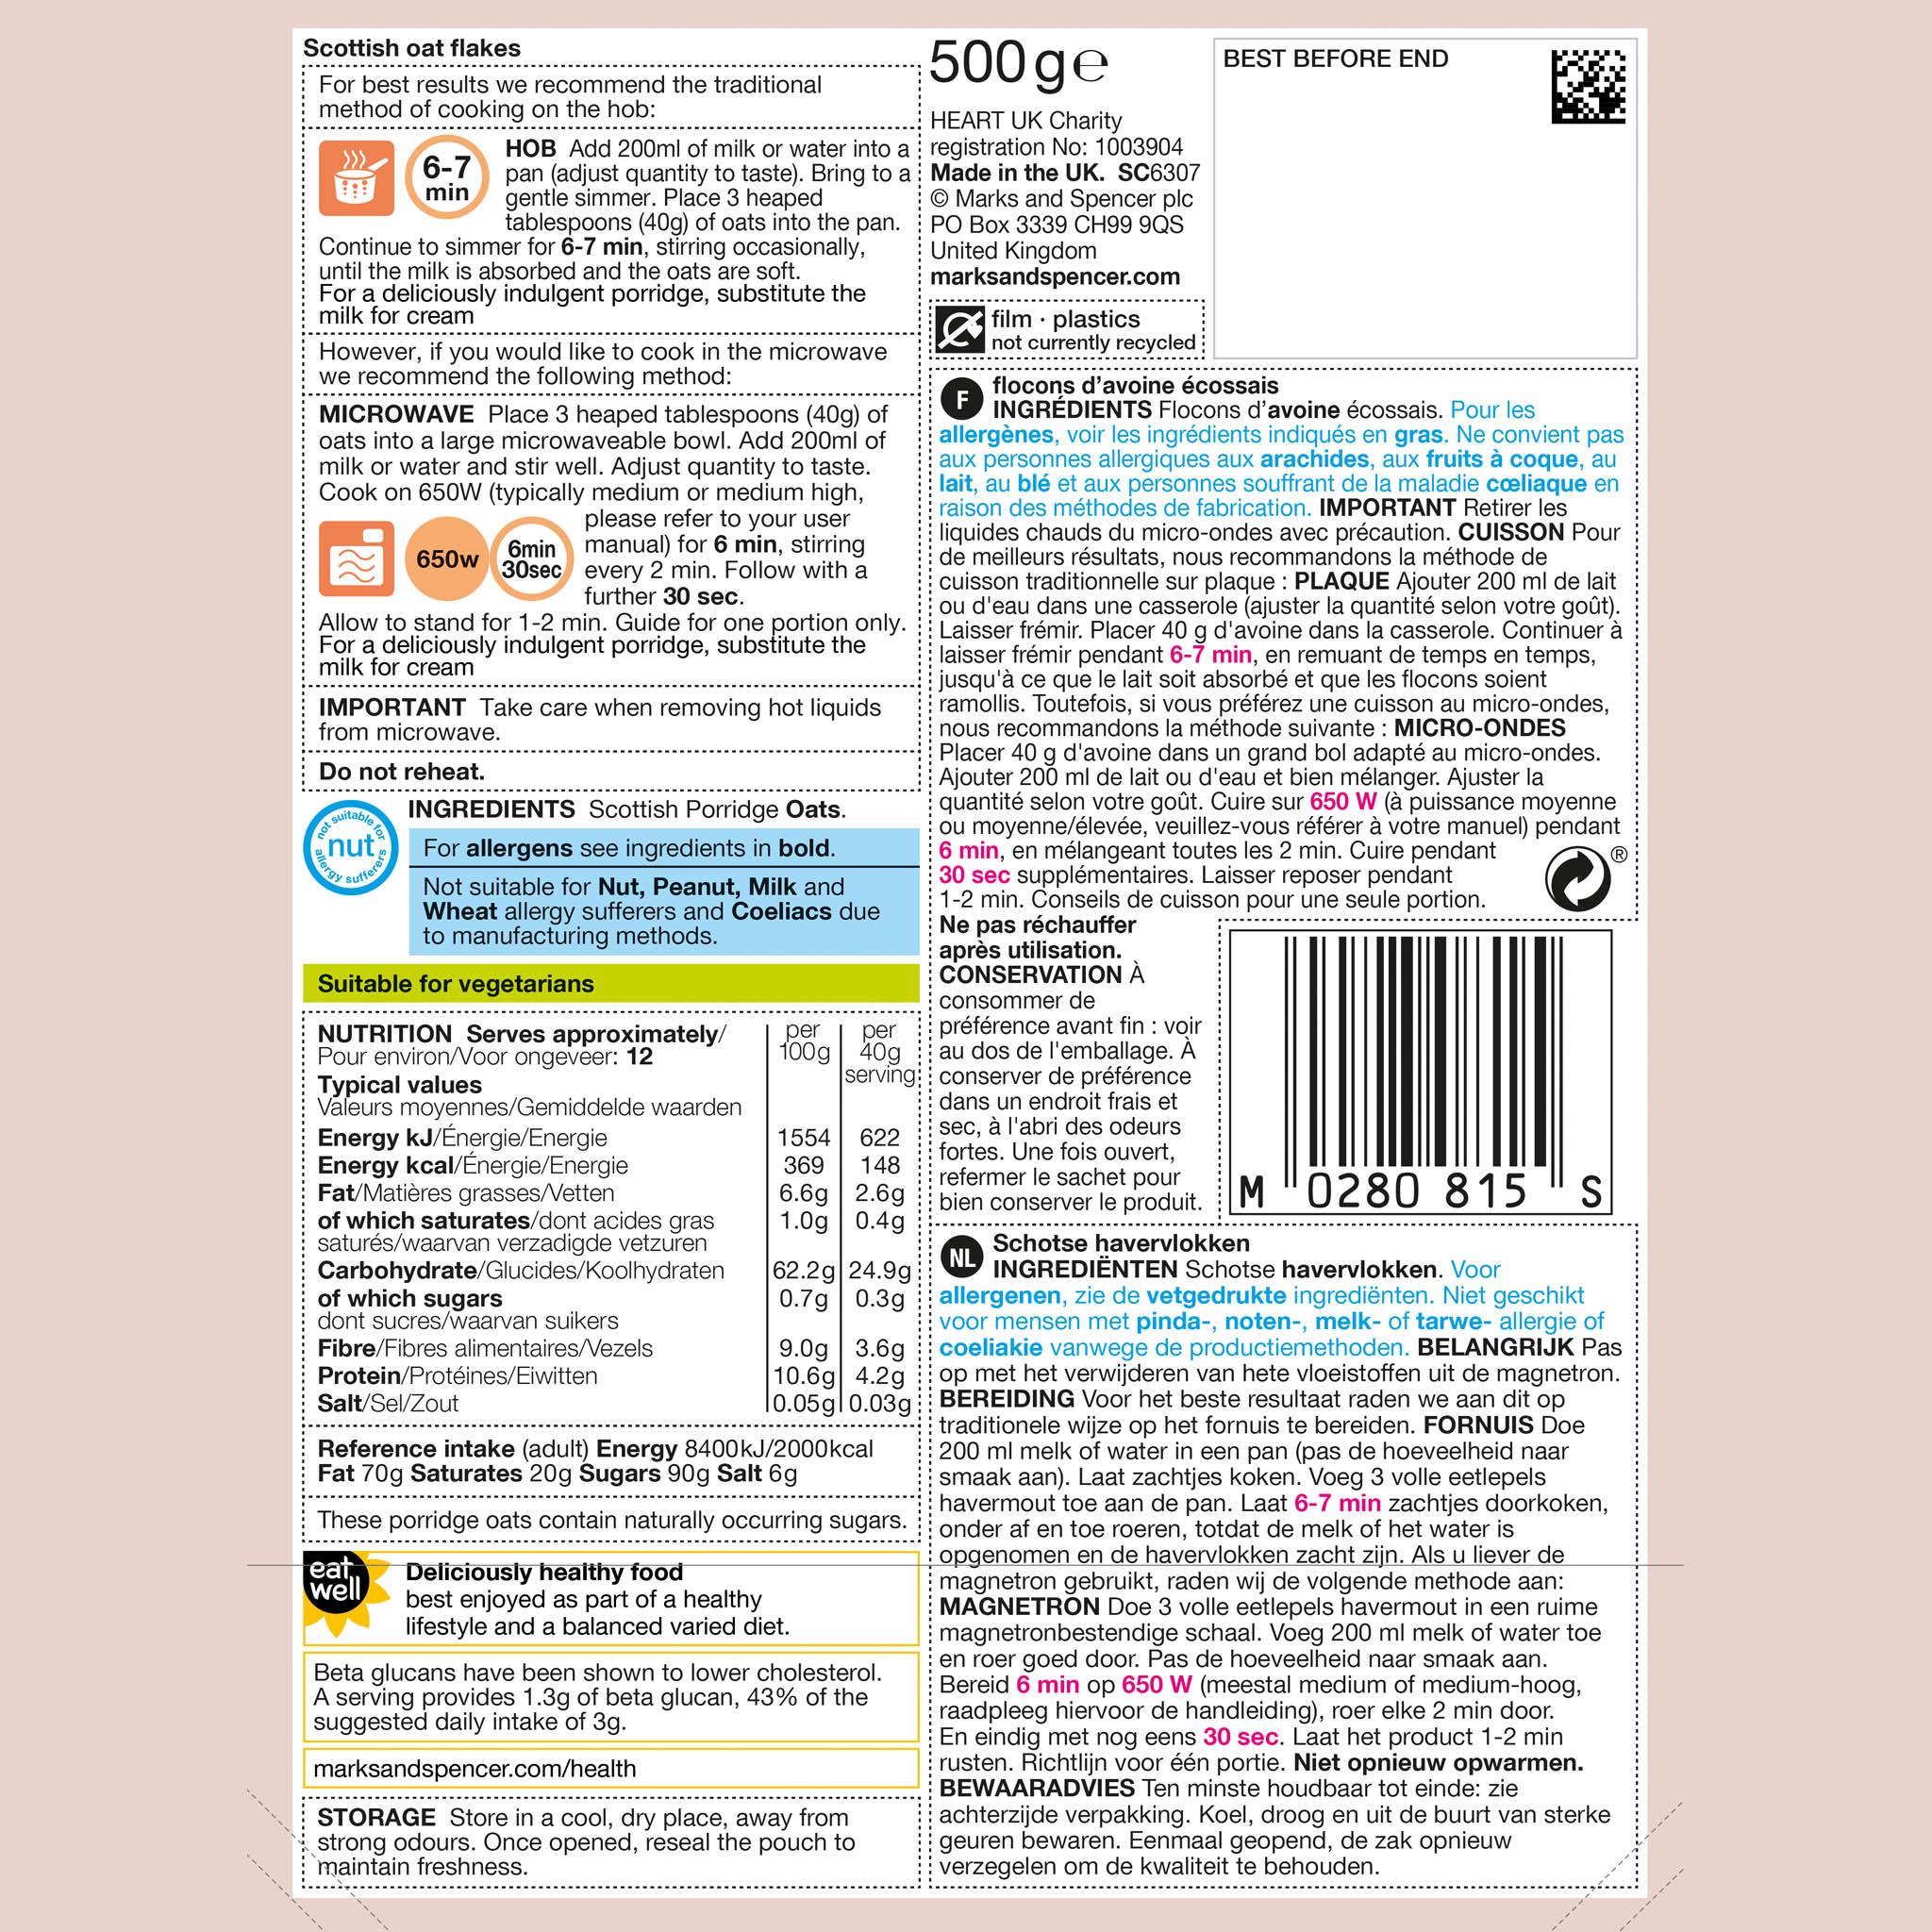 Whole Scottish Porridge Oats 500g Label